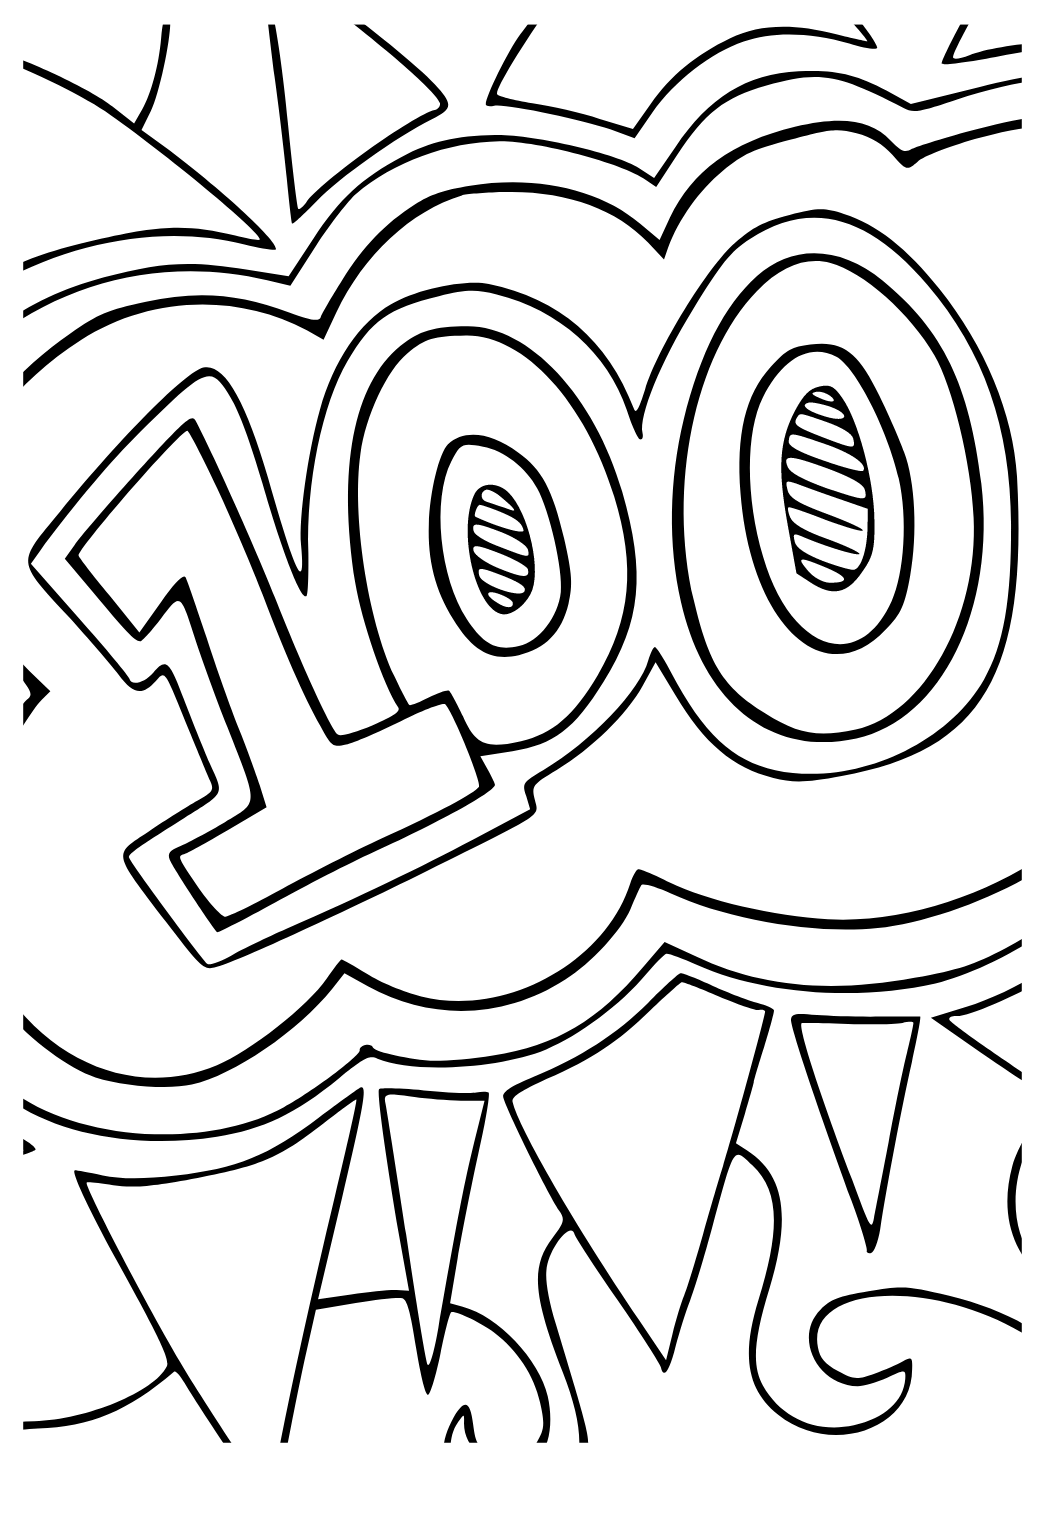 100 Desenhos para Adultos Colorir e Imprimir - Online Cursos Gratuitos   Dibujos para colorear, Imprimir dibujos para colorear, Mandalas para  colorear animales